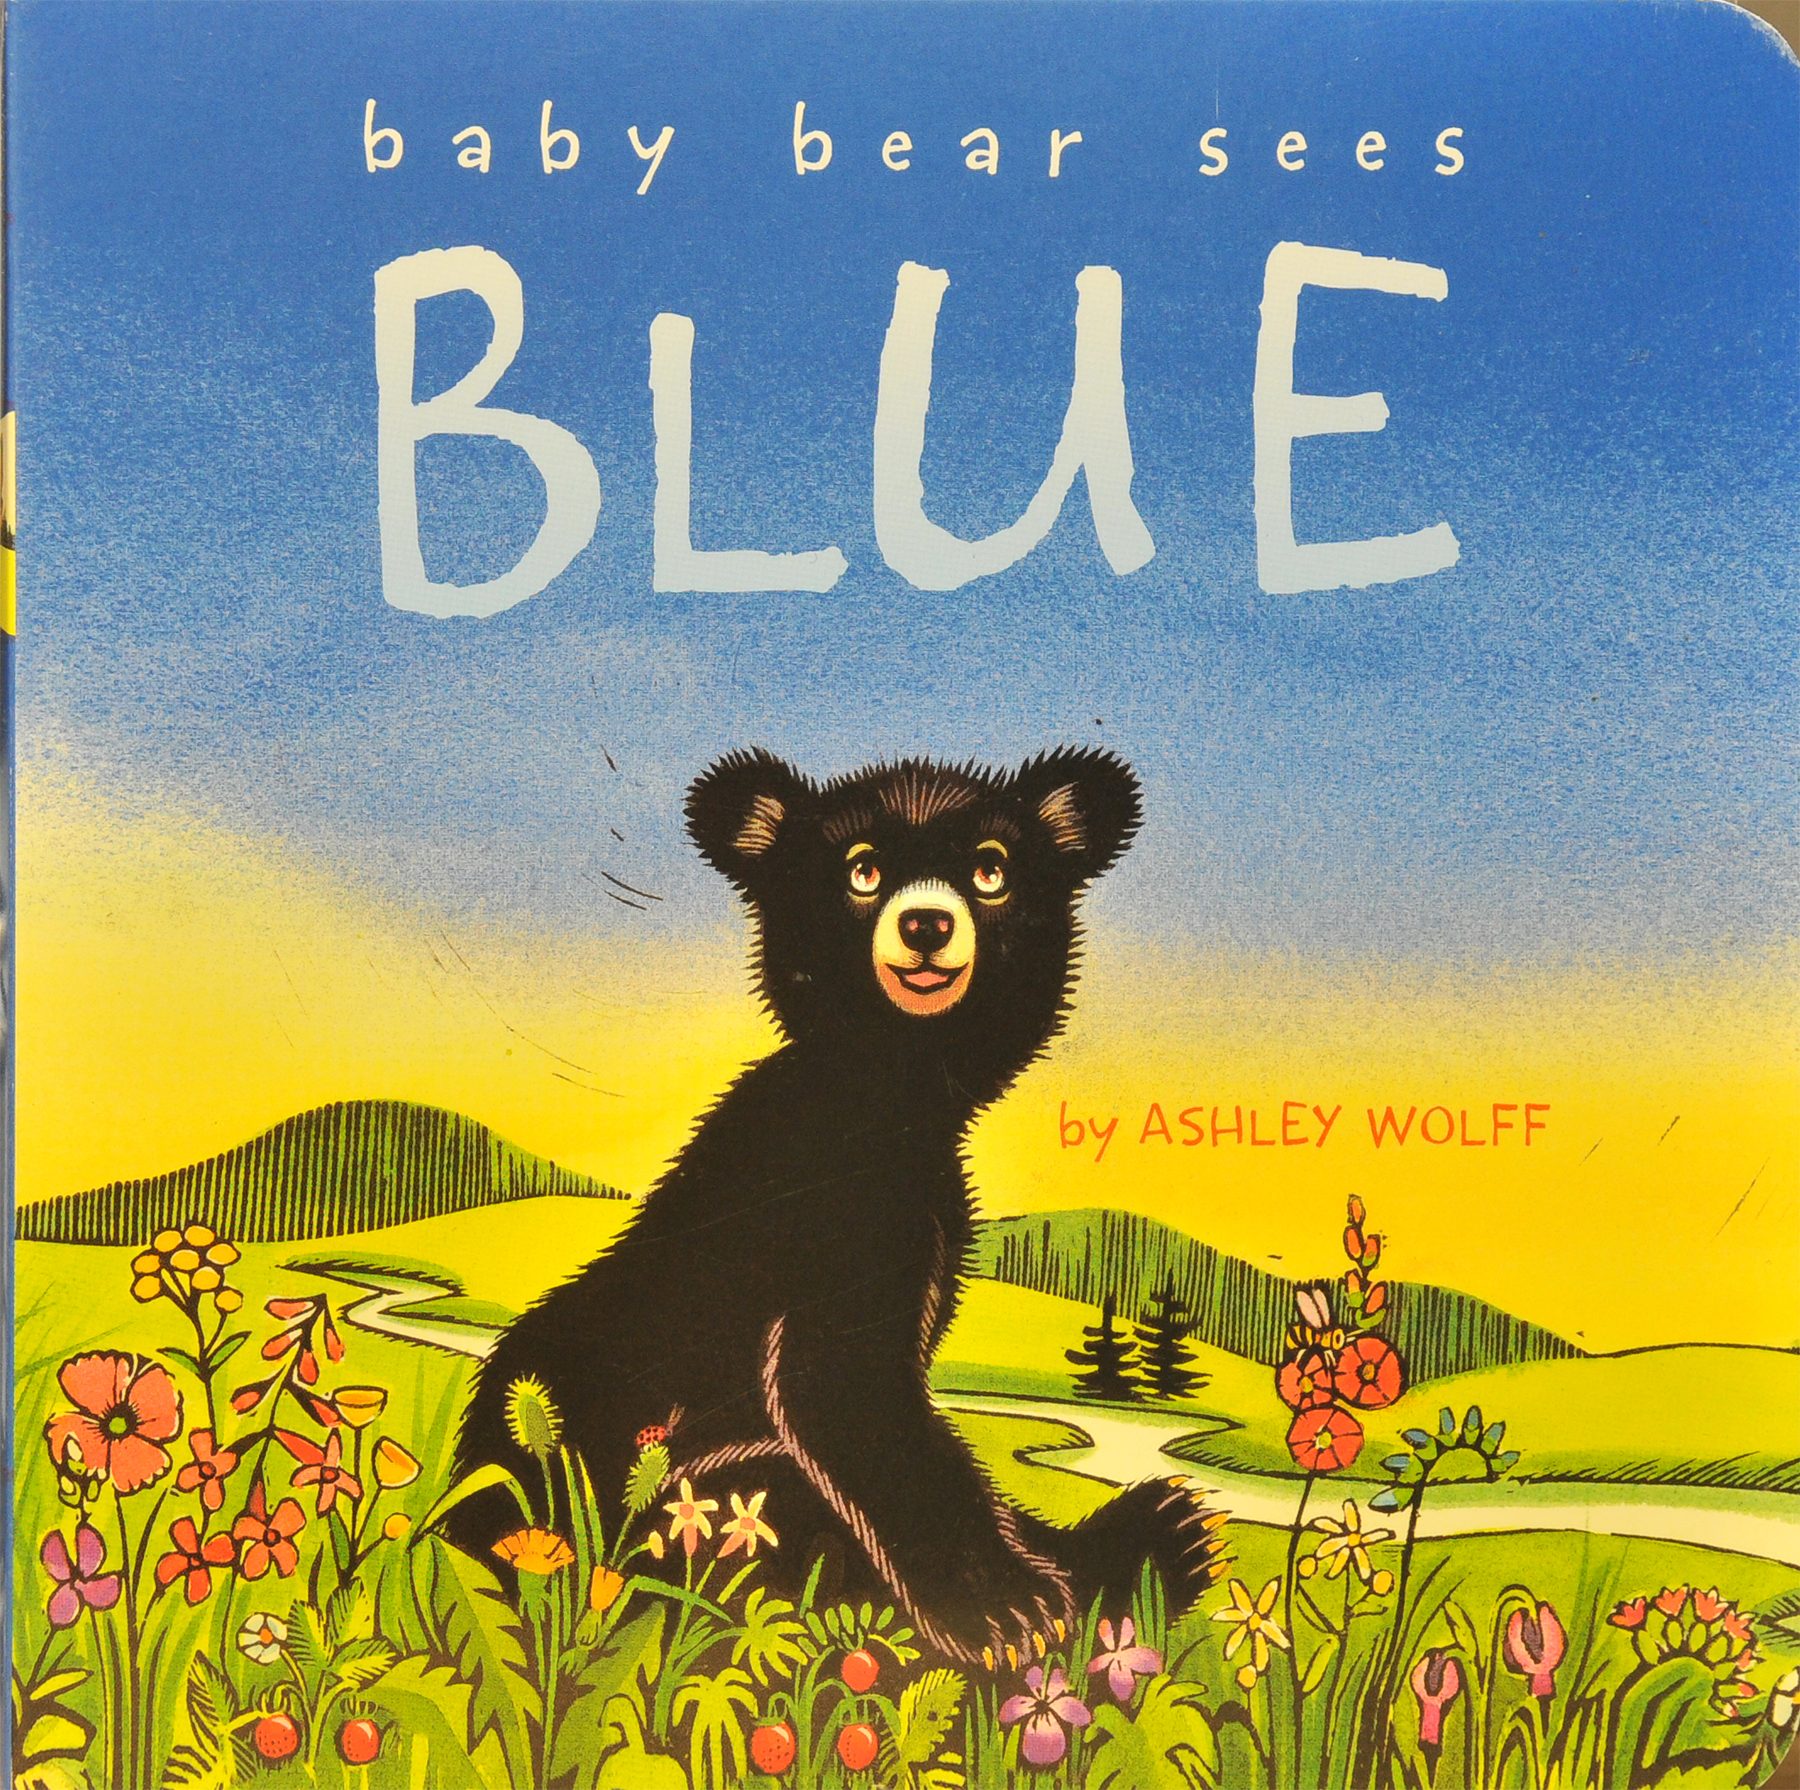 Book　Mountain　Bear　Blue　Conservancy　Board　Rocky　Baby　Sees